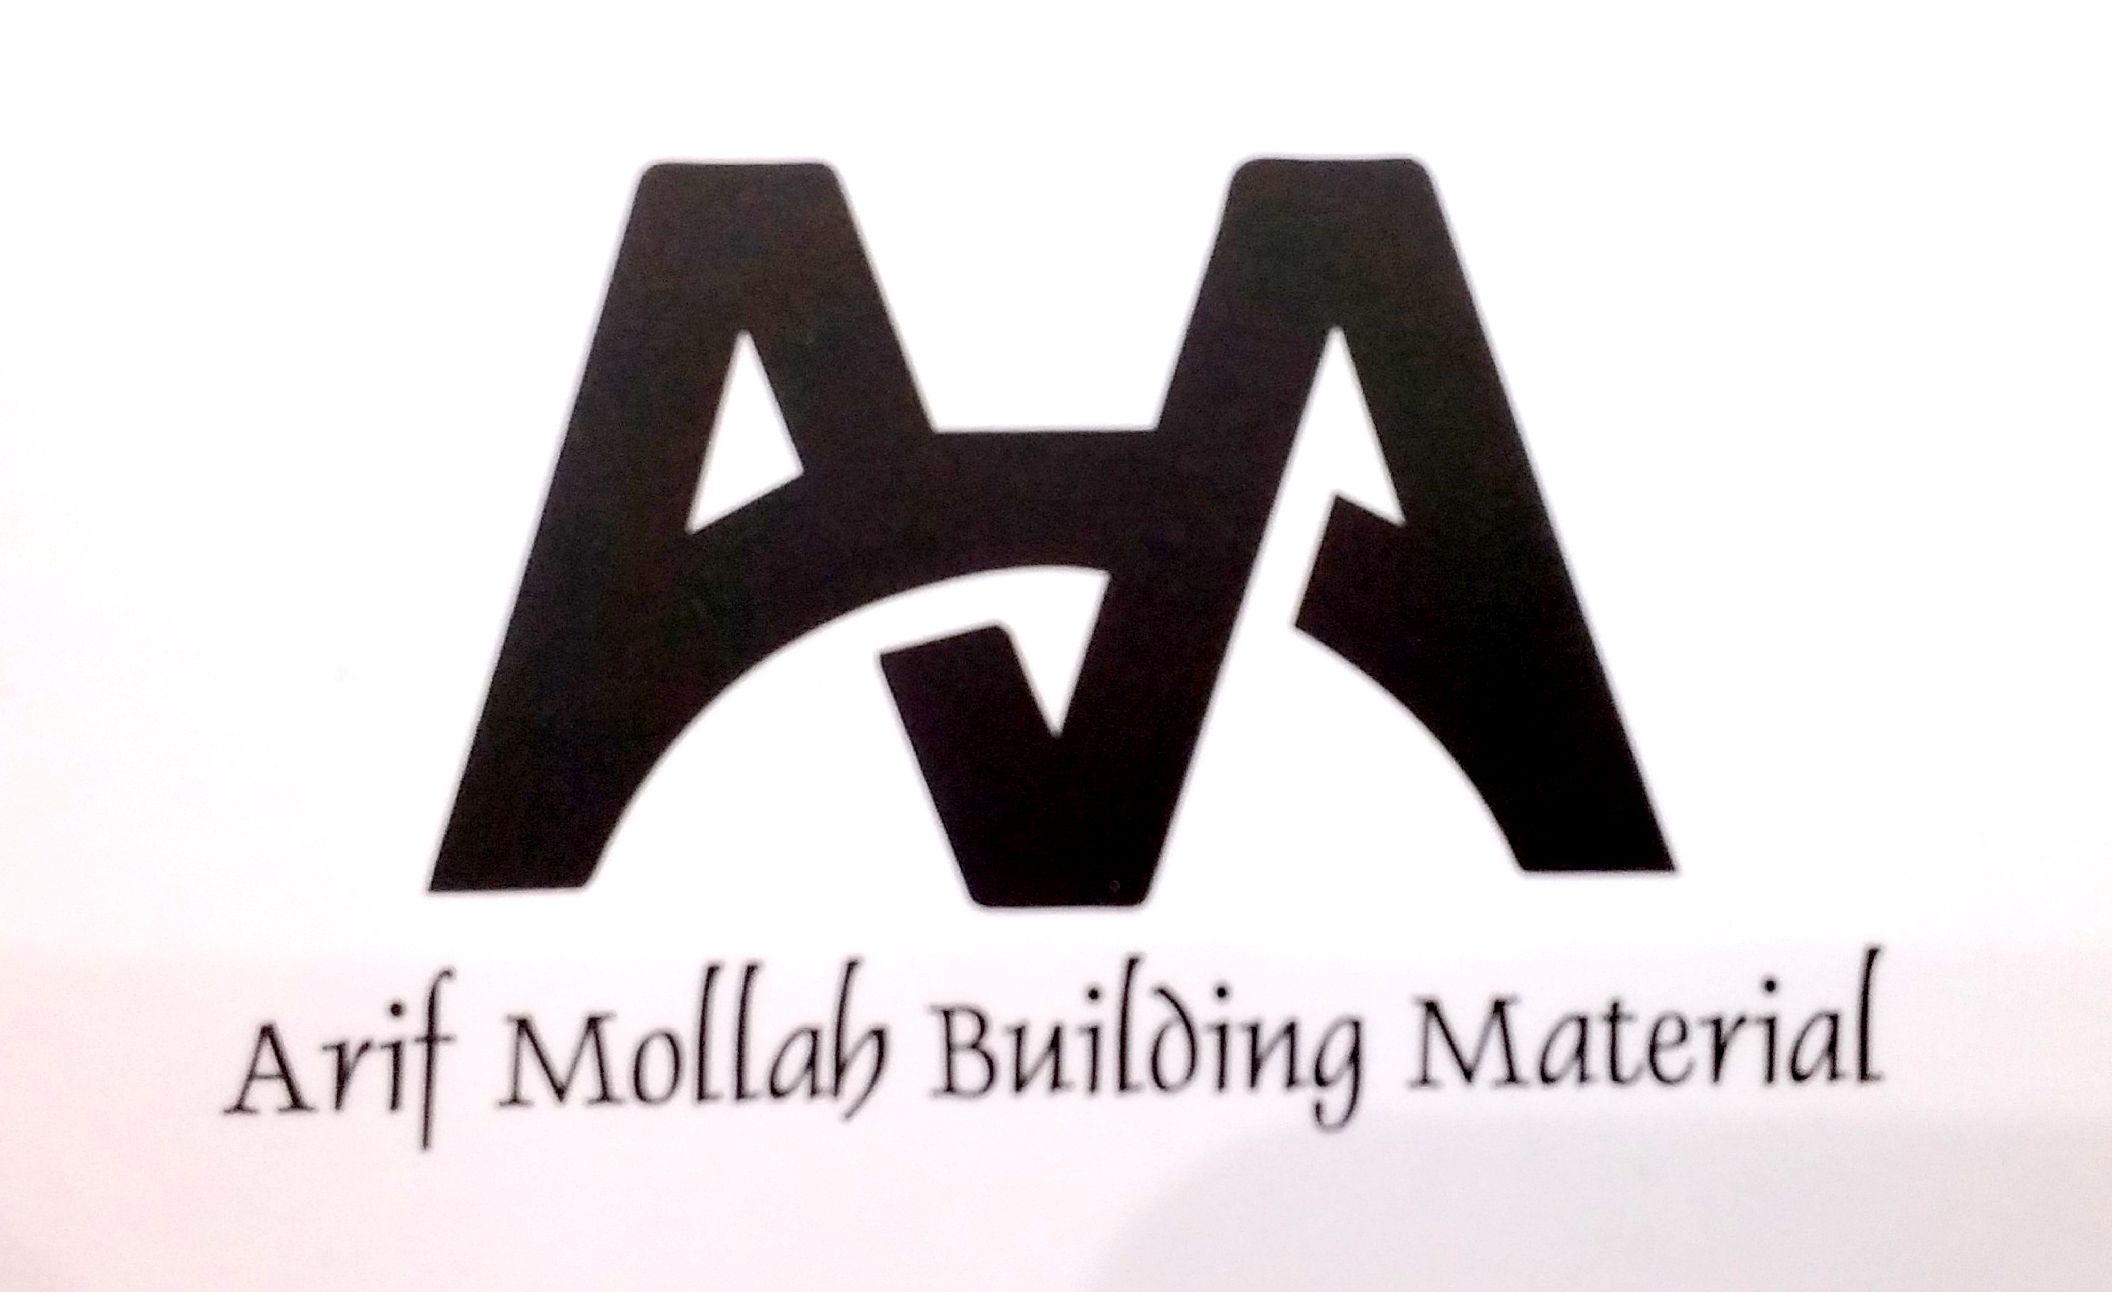 ARIF MOLLAH BUILDING MATERIAL TRADING FZCO